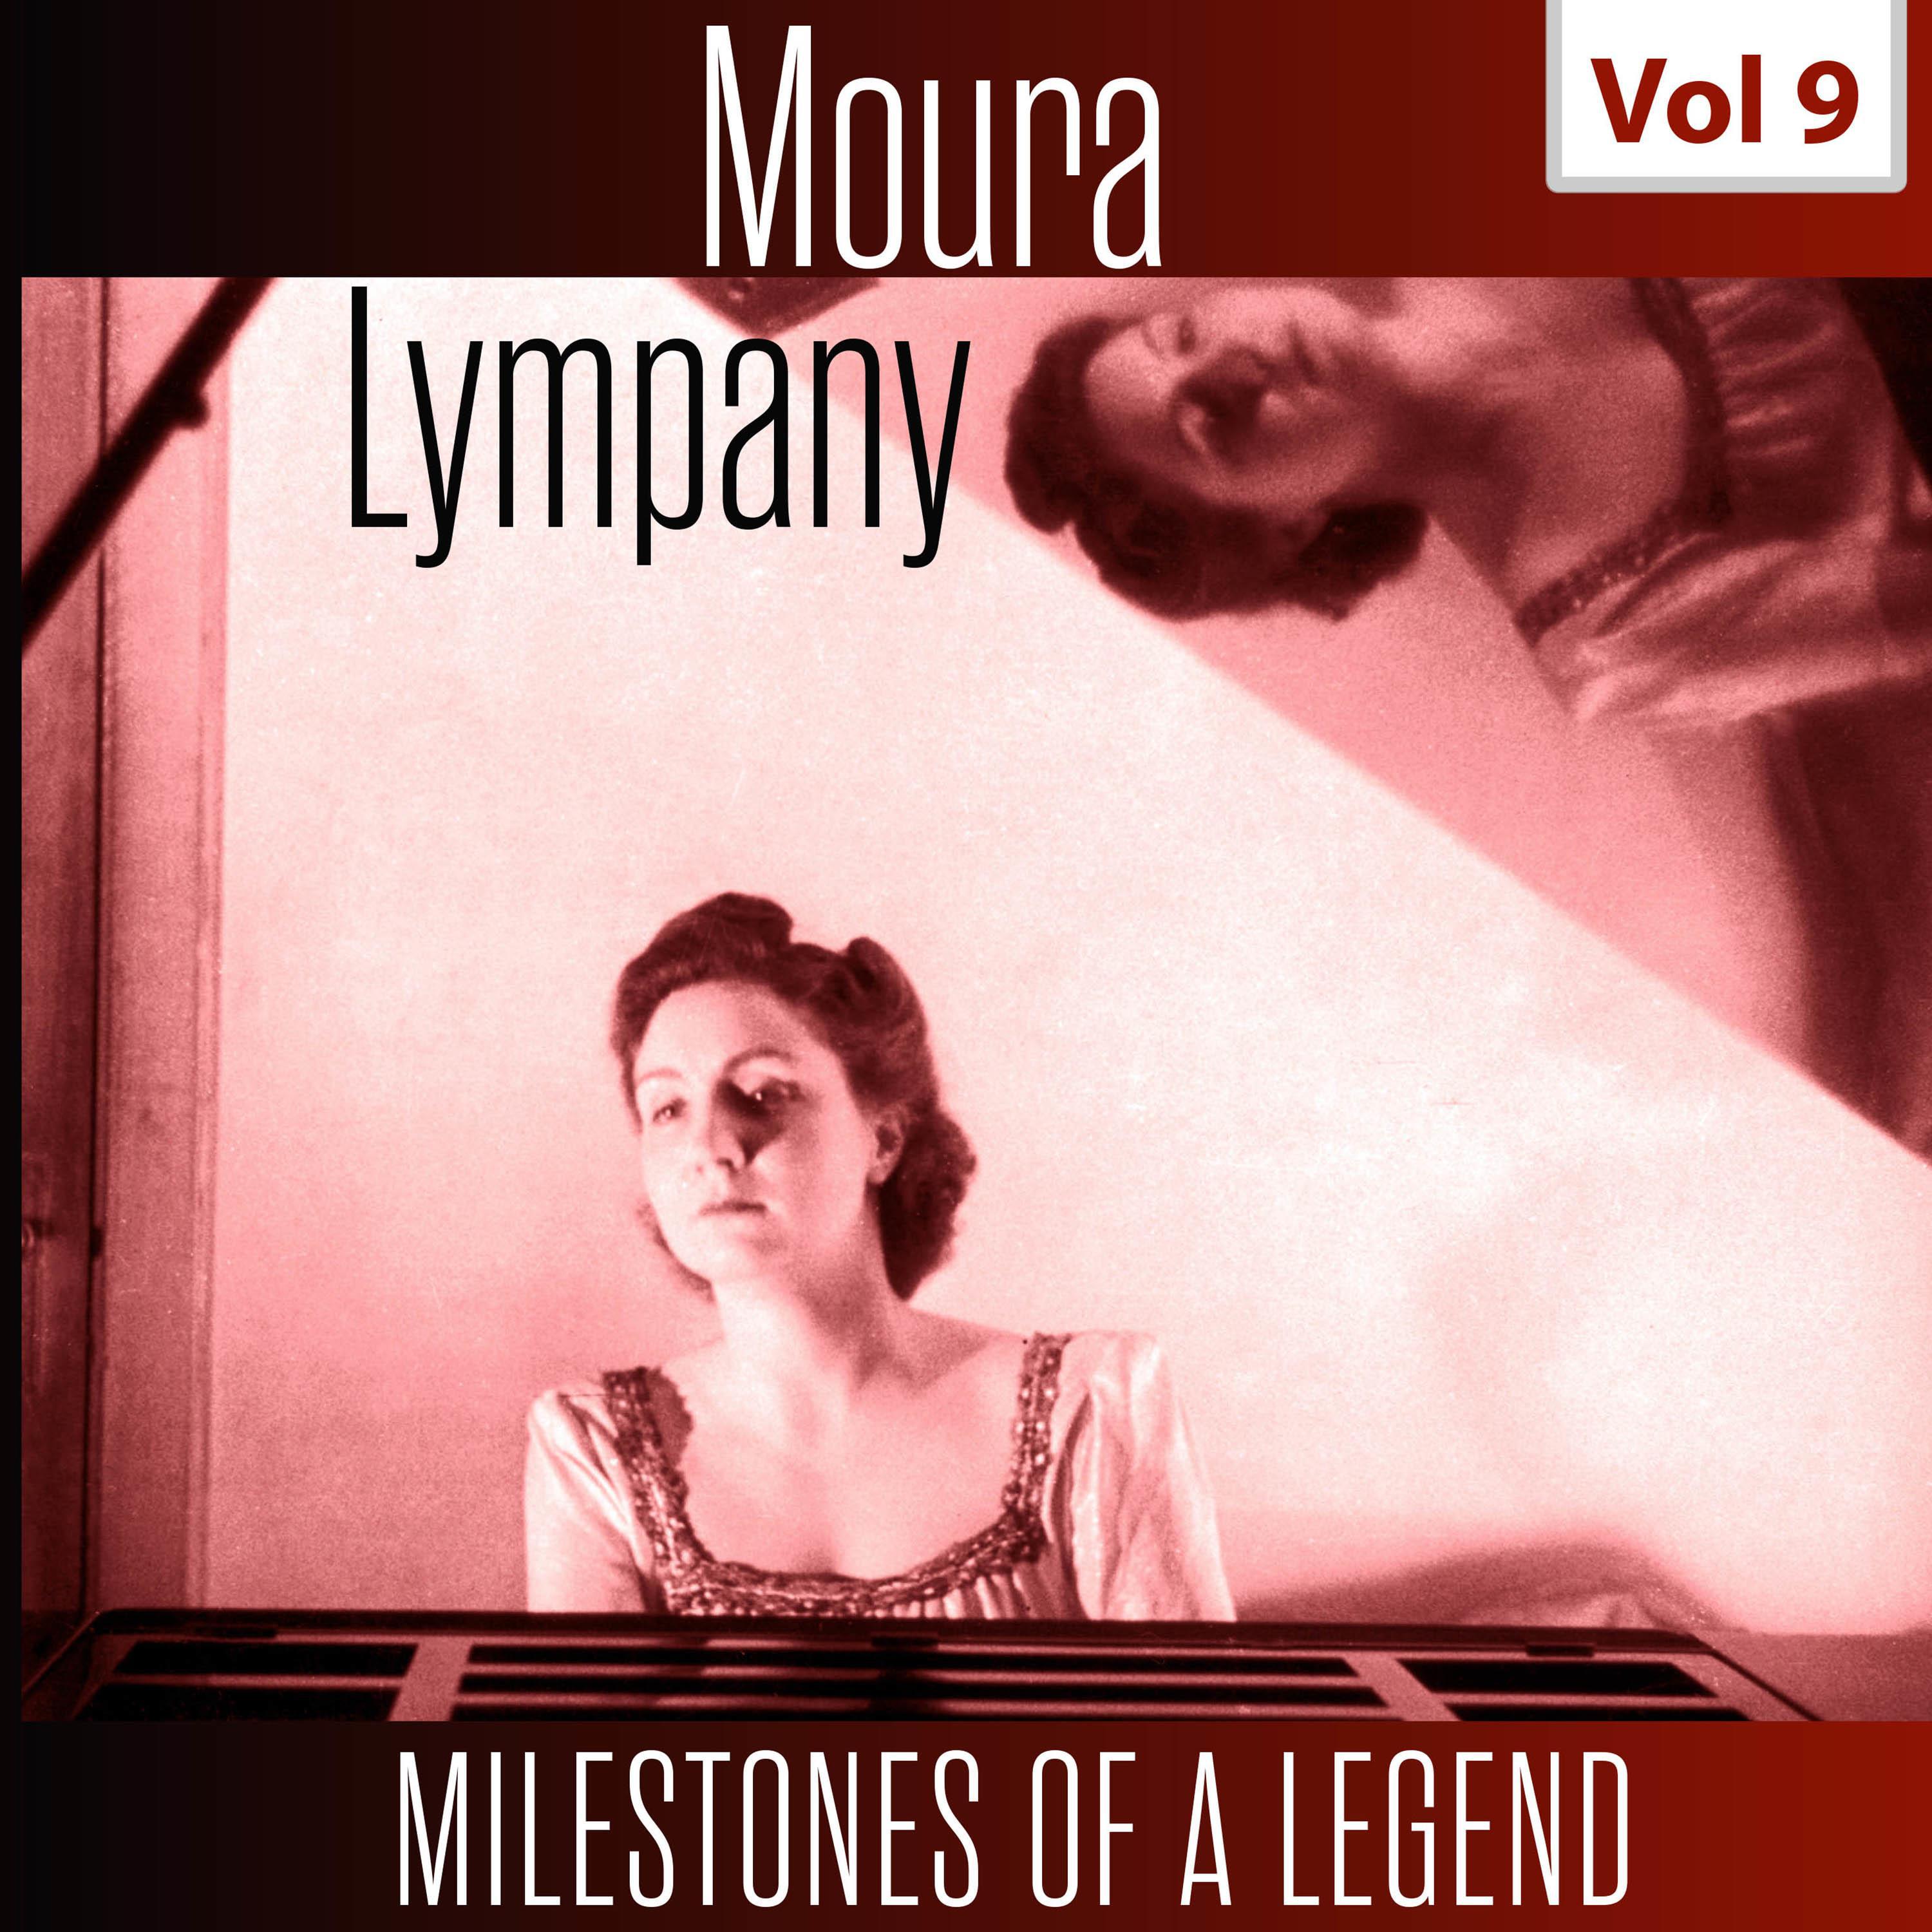 Milestones of a Legend - Moura Lympany, Vol. 9